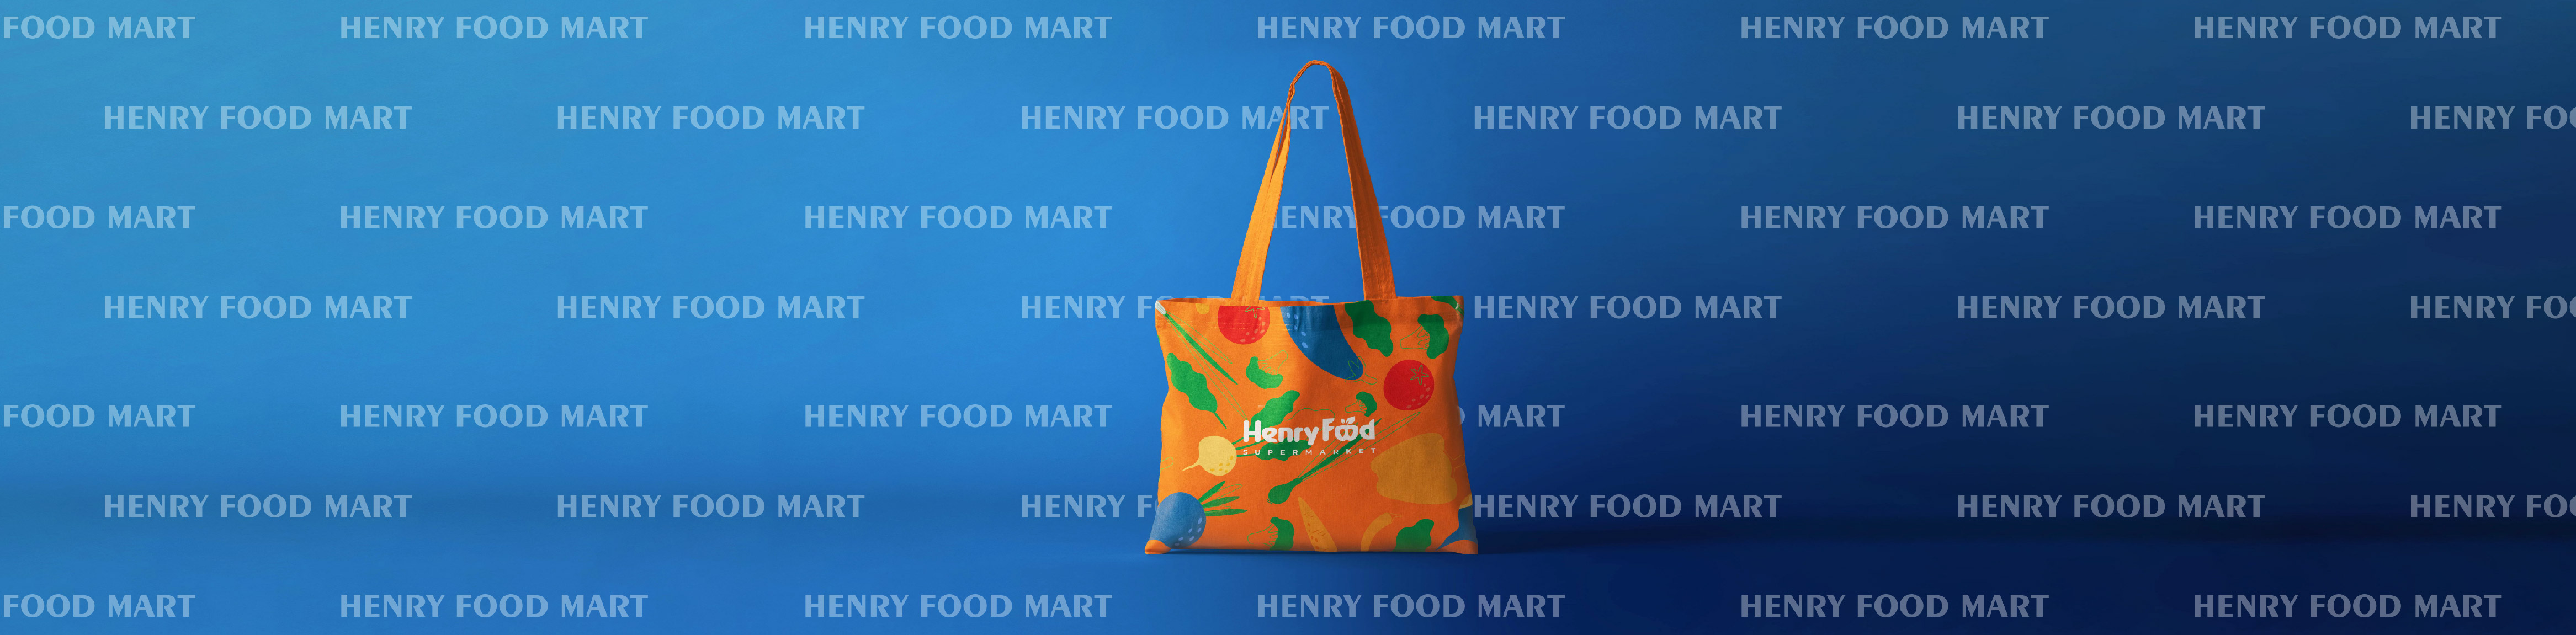 Henry Food